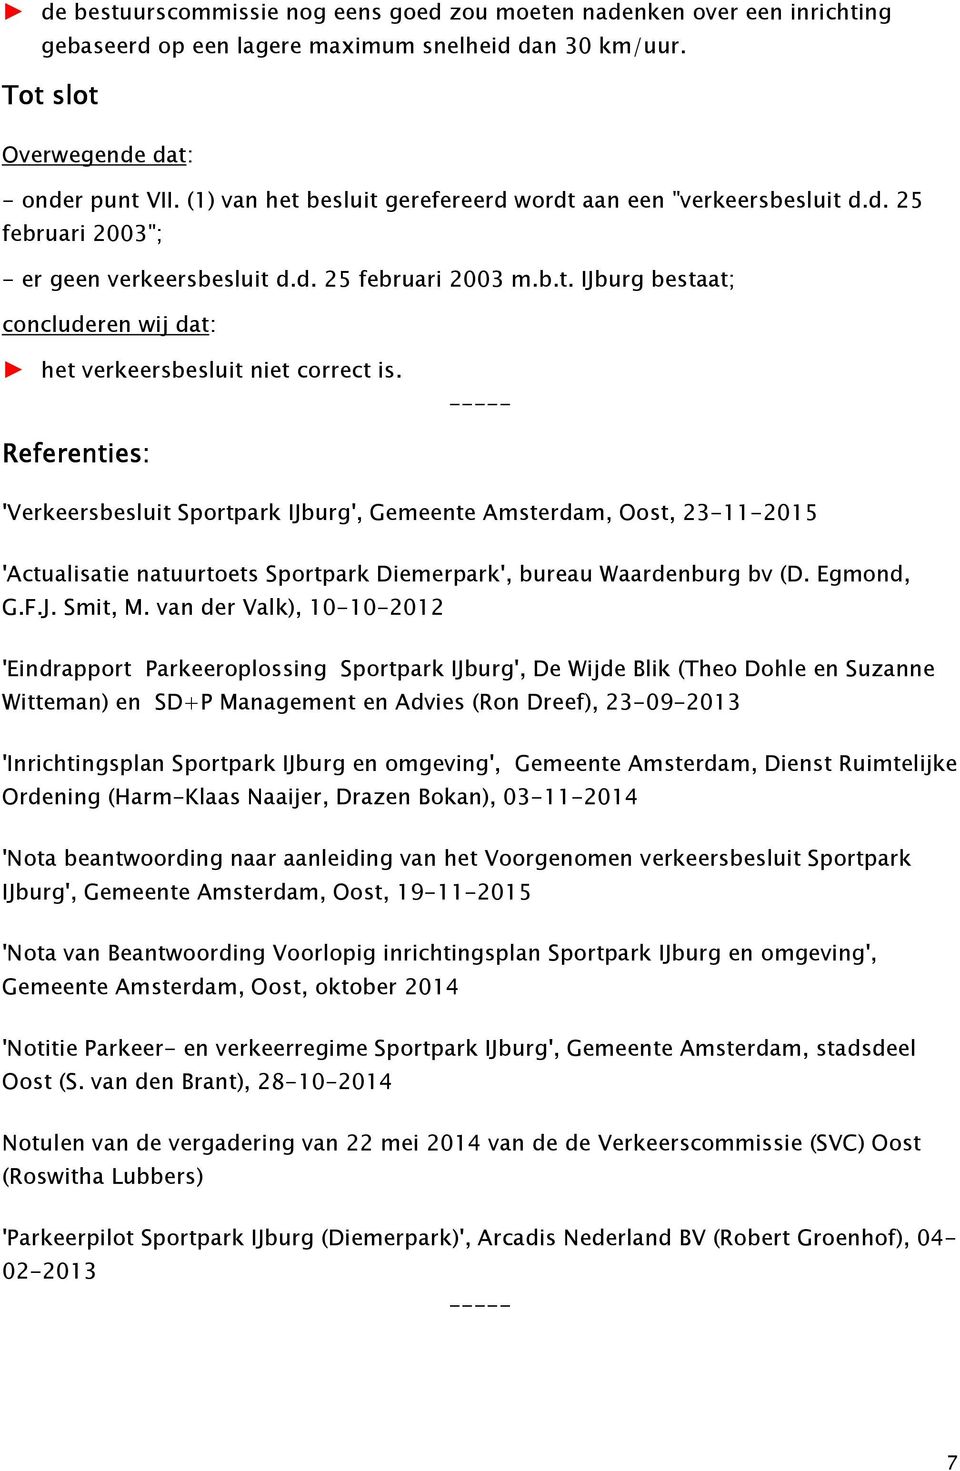 ----- Referenties: 'Verkeersbesluit Sportpark IJburg', Gemeente Amsterdam, Oost, 23-11-2015 'Actualisatie natuurtoets Sportpark Diemerpark', bureau Waardenburg bv (D. Egmond, G.F.J. Smit, M.